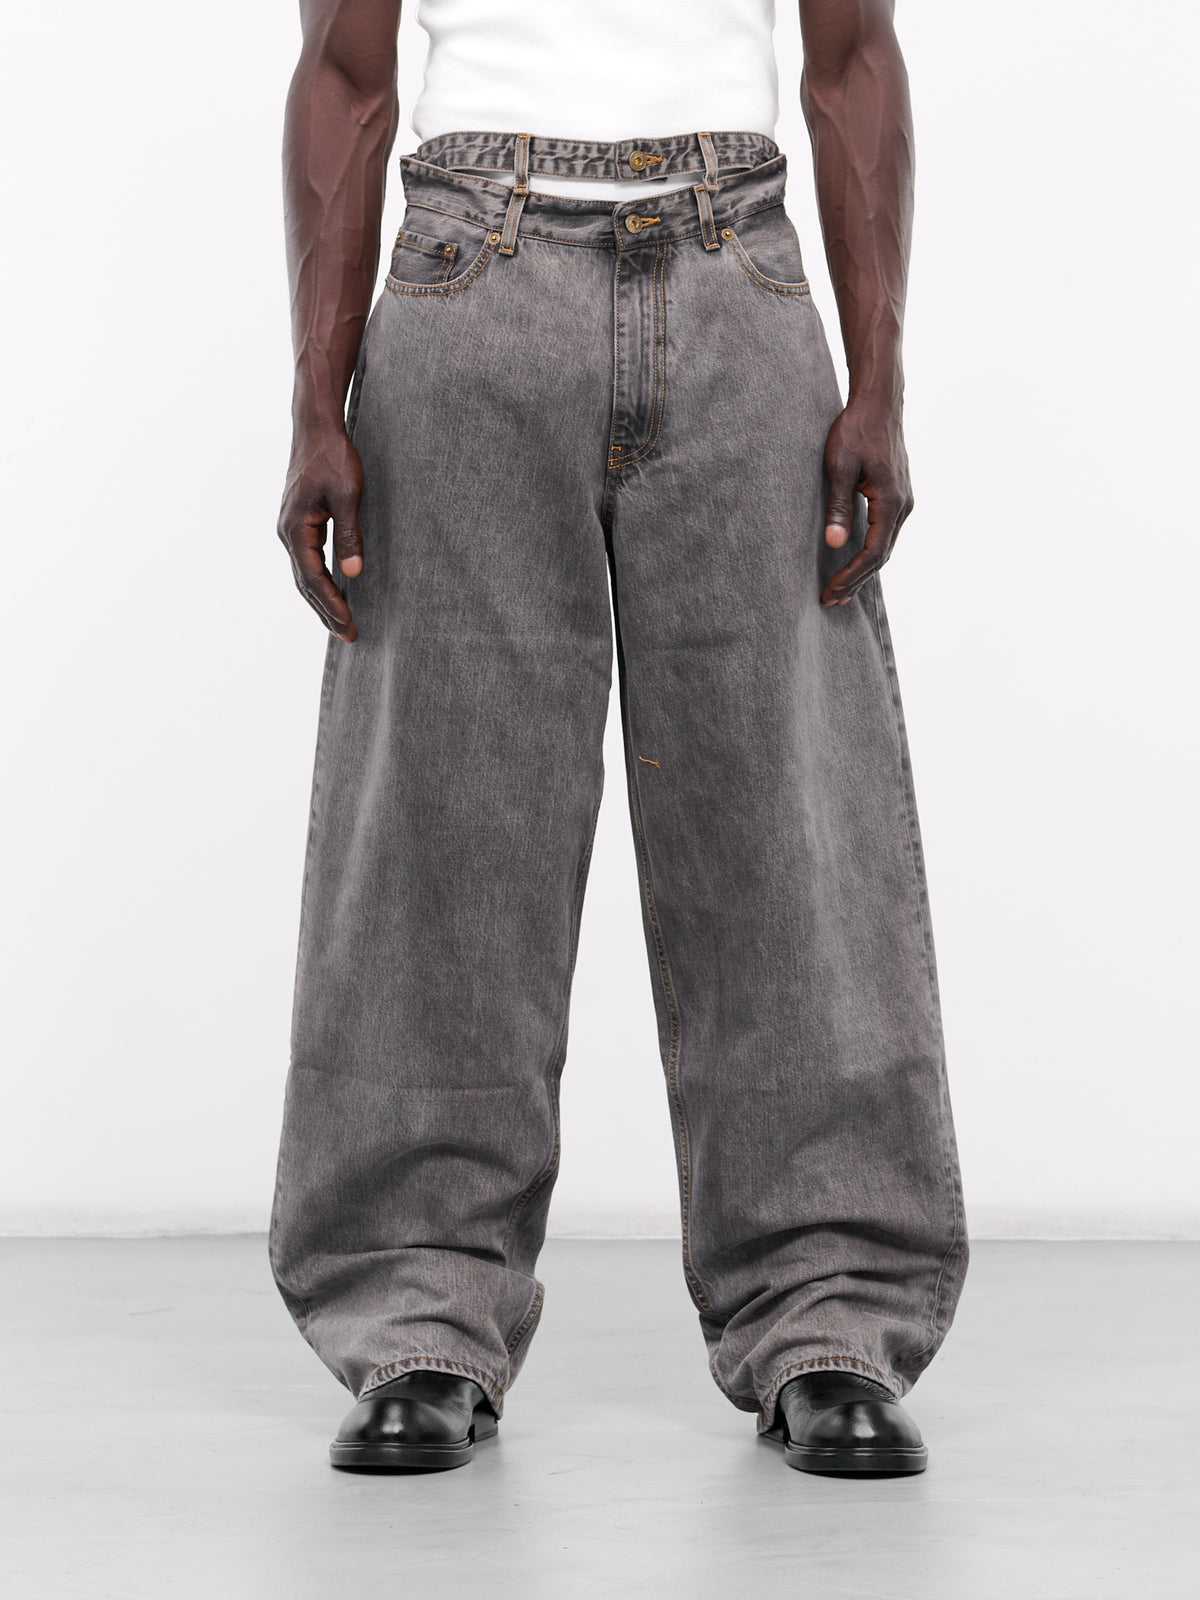 Evergreen Multi-Waistband Jeans (207PA007-D51-EVERGREEN-MULTI)